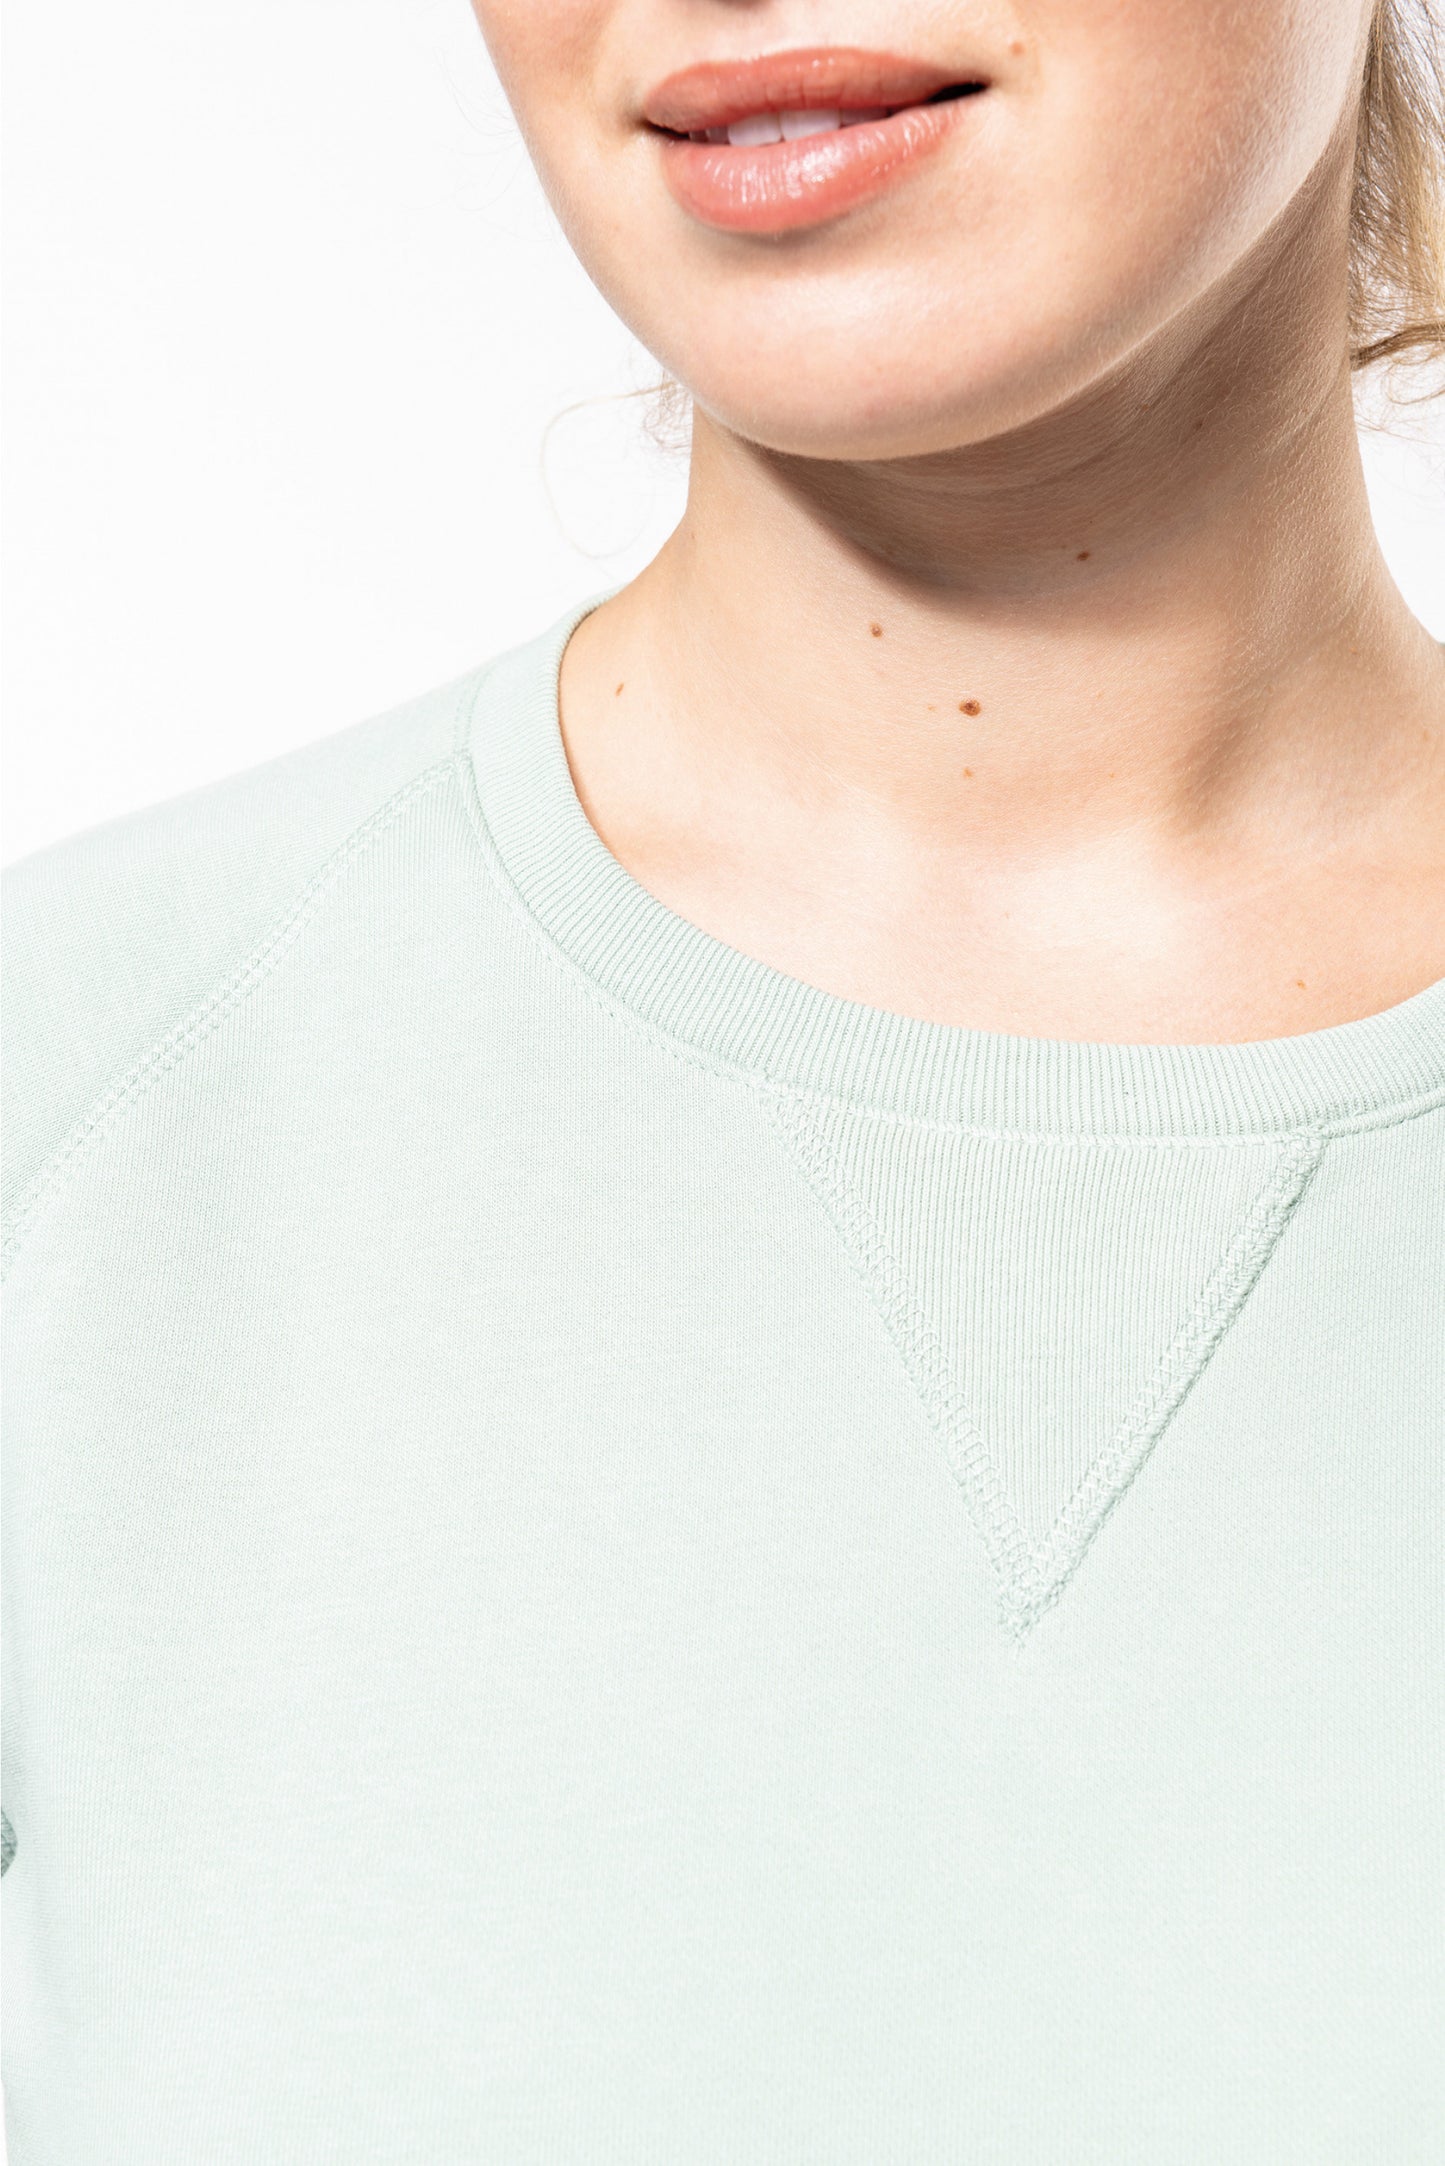 K481 - Sweat-shirt Bio col rond manches raglan femme